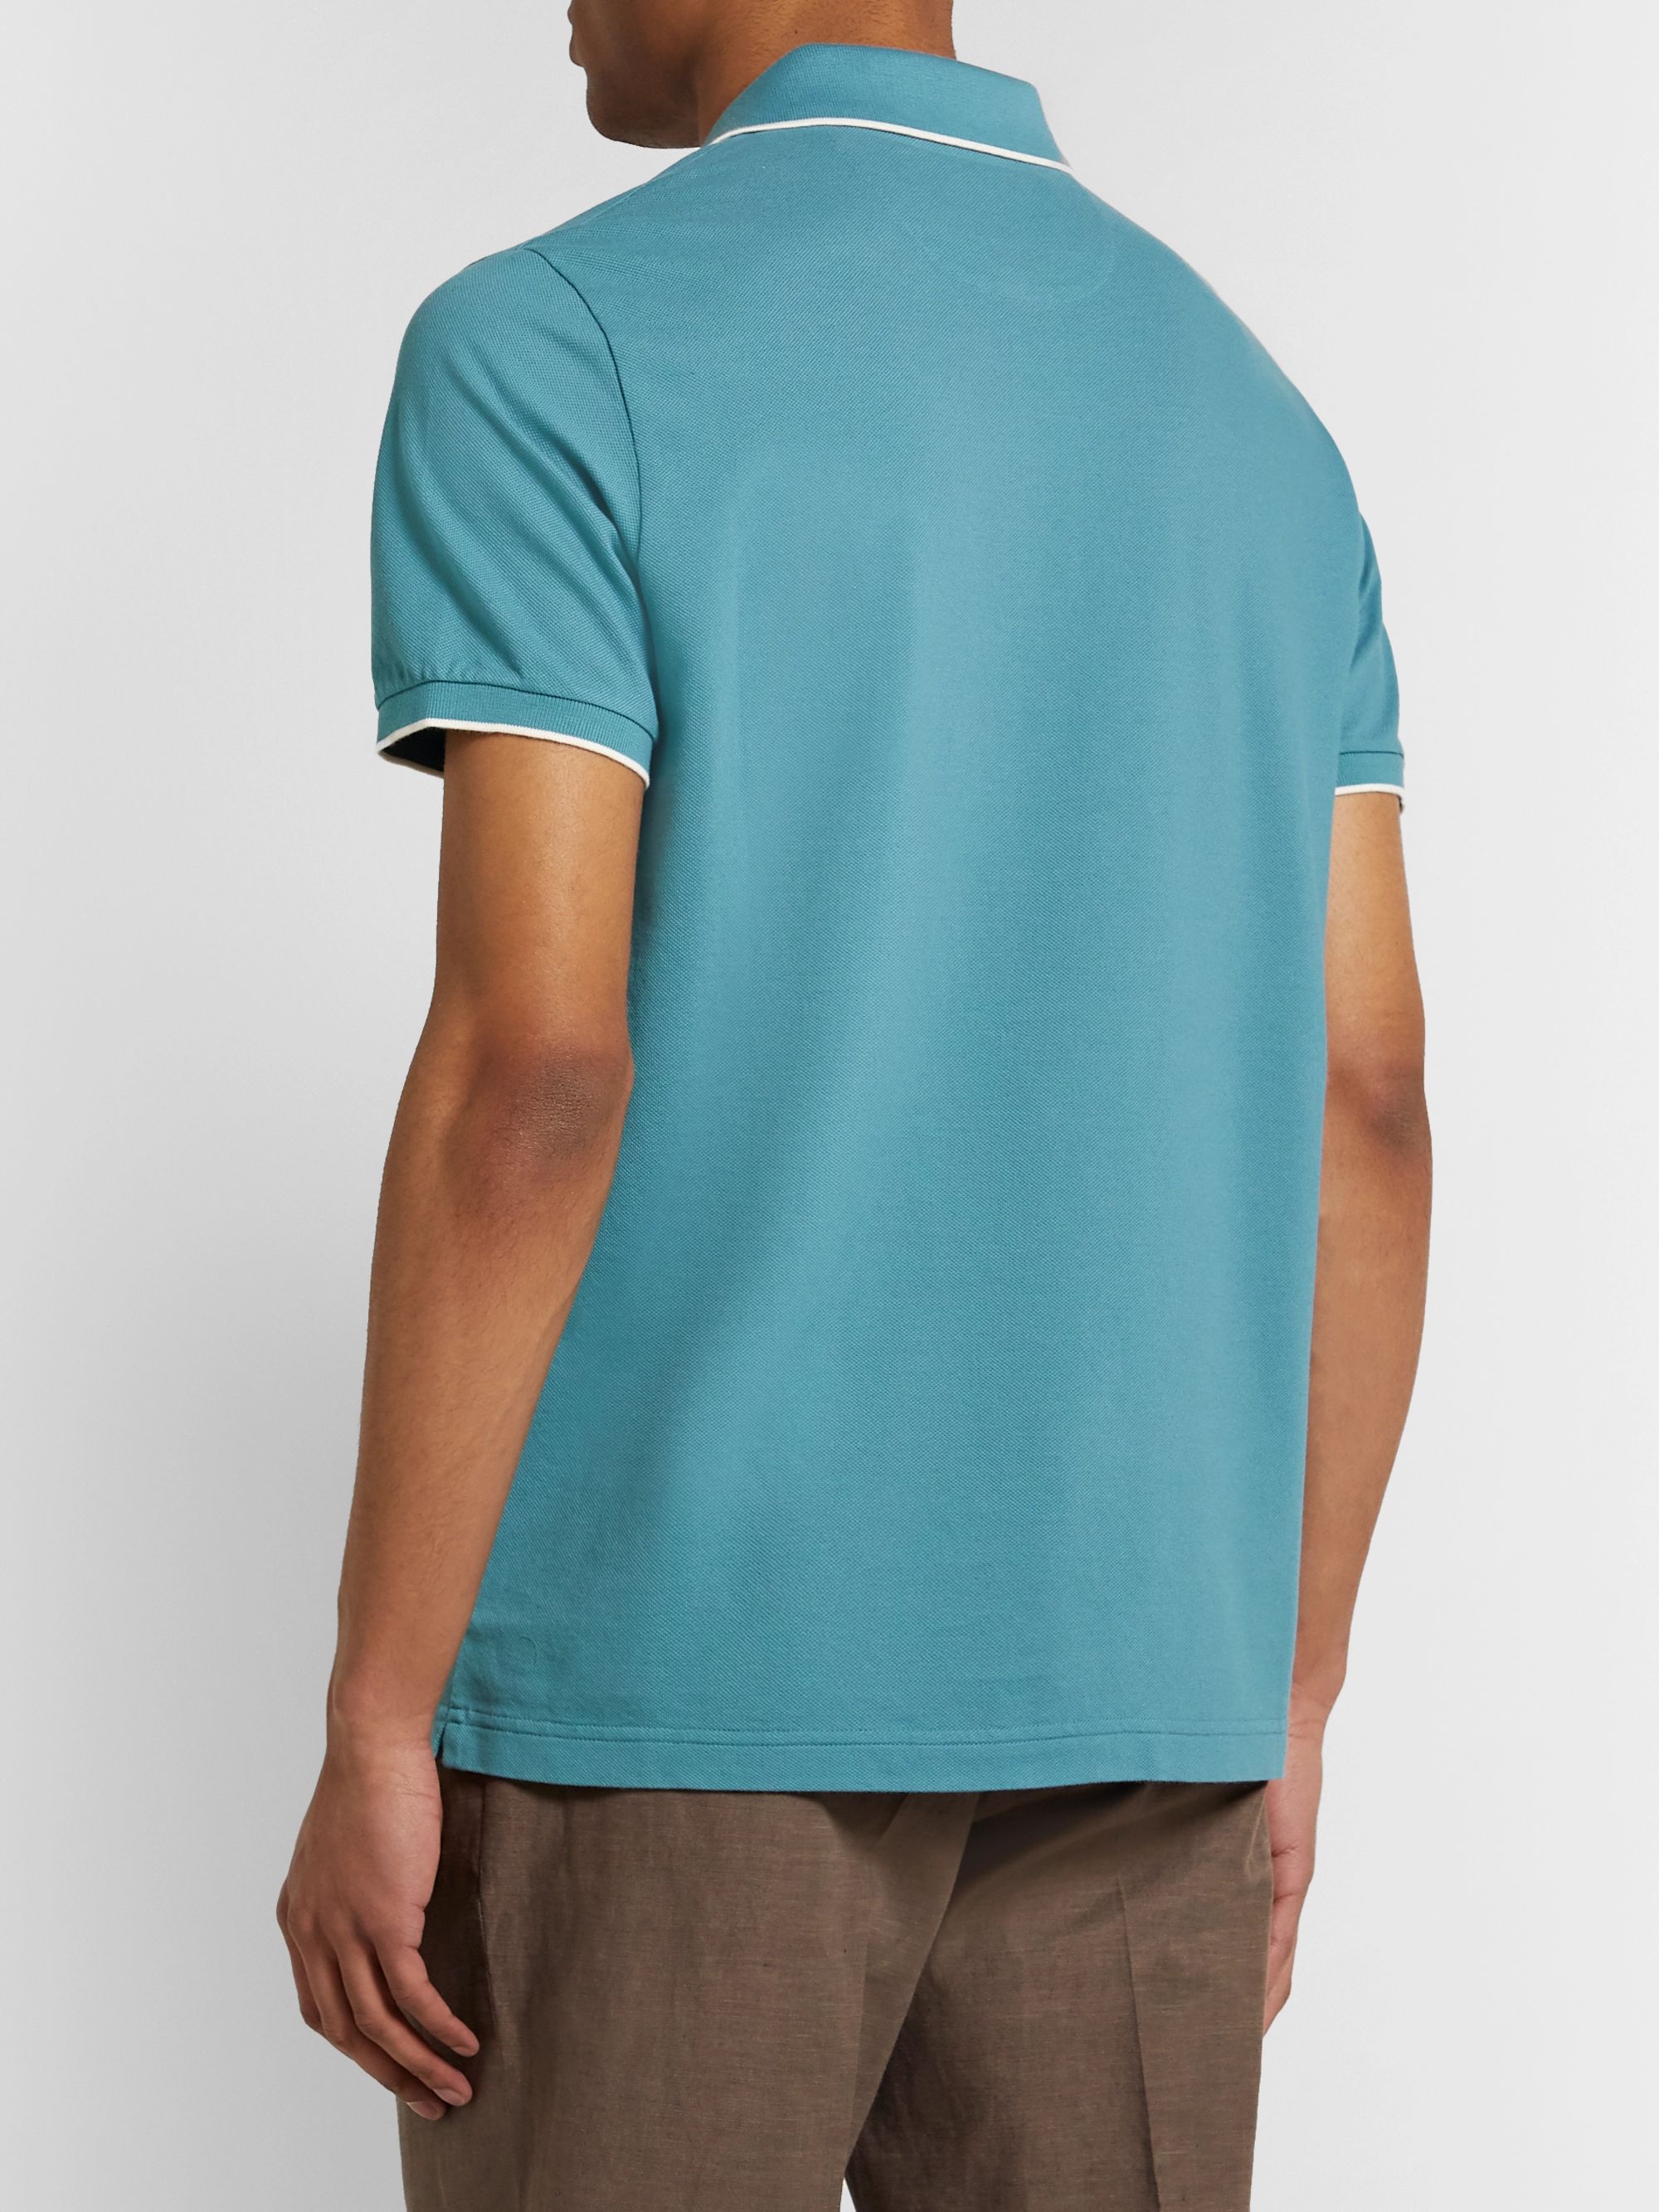 Teal Contrast-Tipped Stretch-Cotton Piqué Polo Shirt | LORO PIANA | MR ...